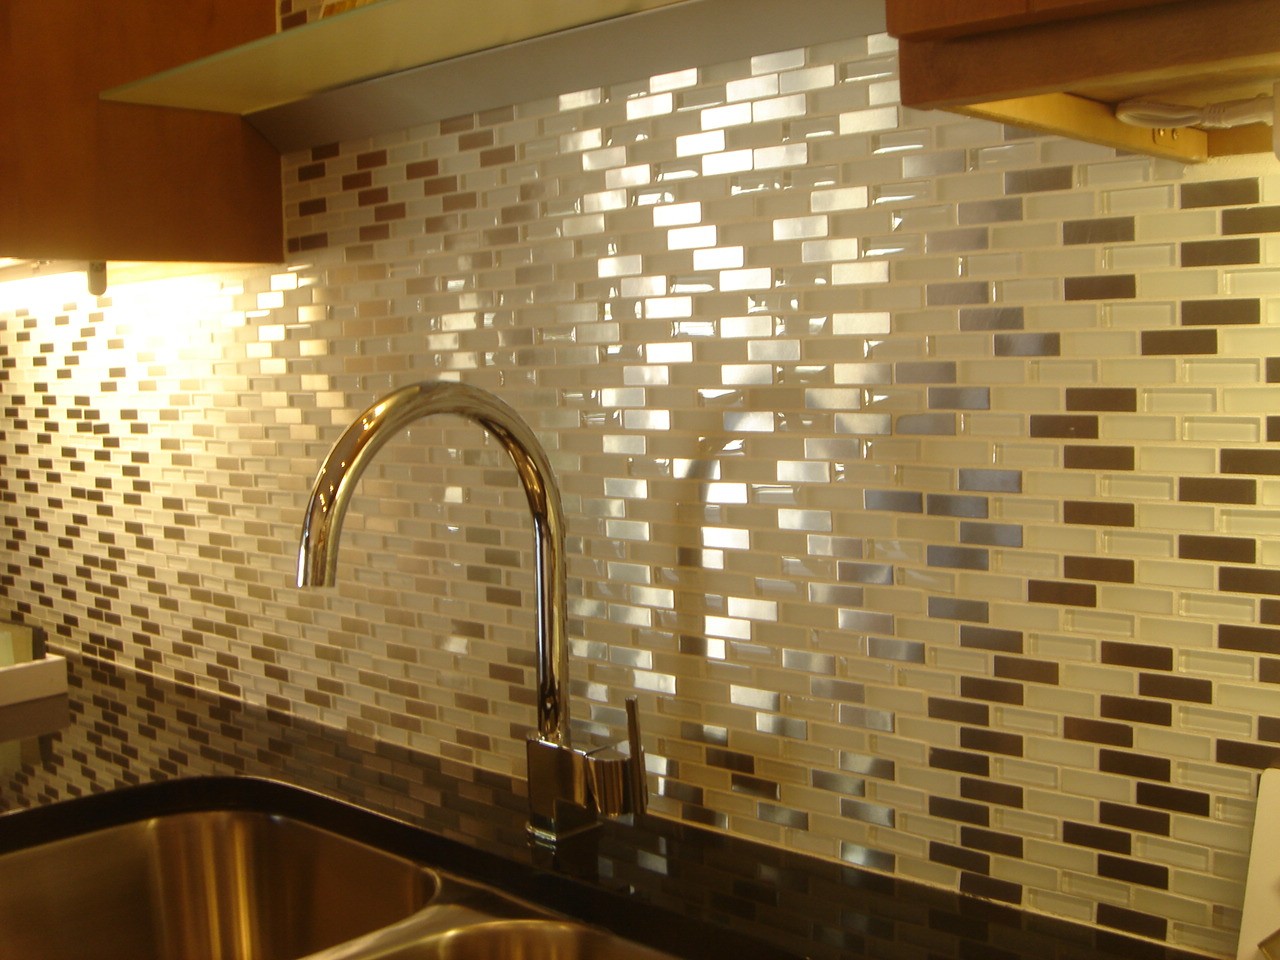 kitchen wall tiles idea images